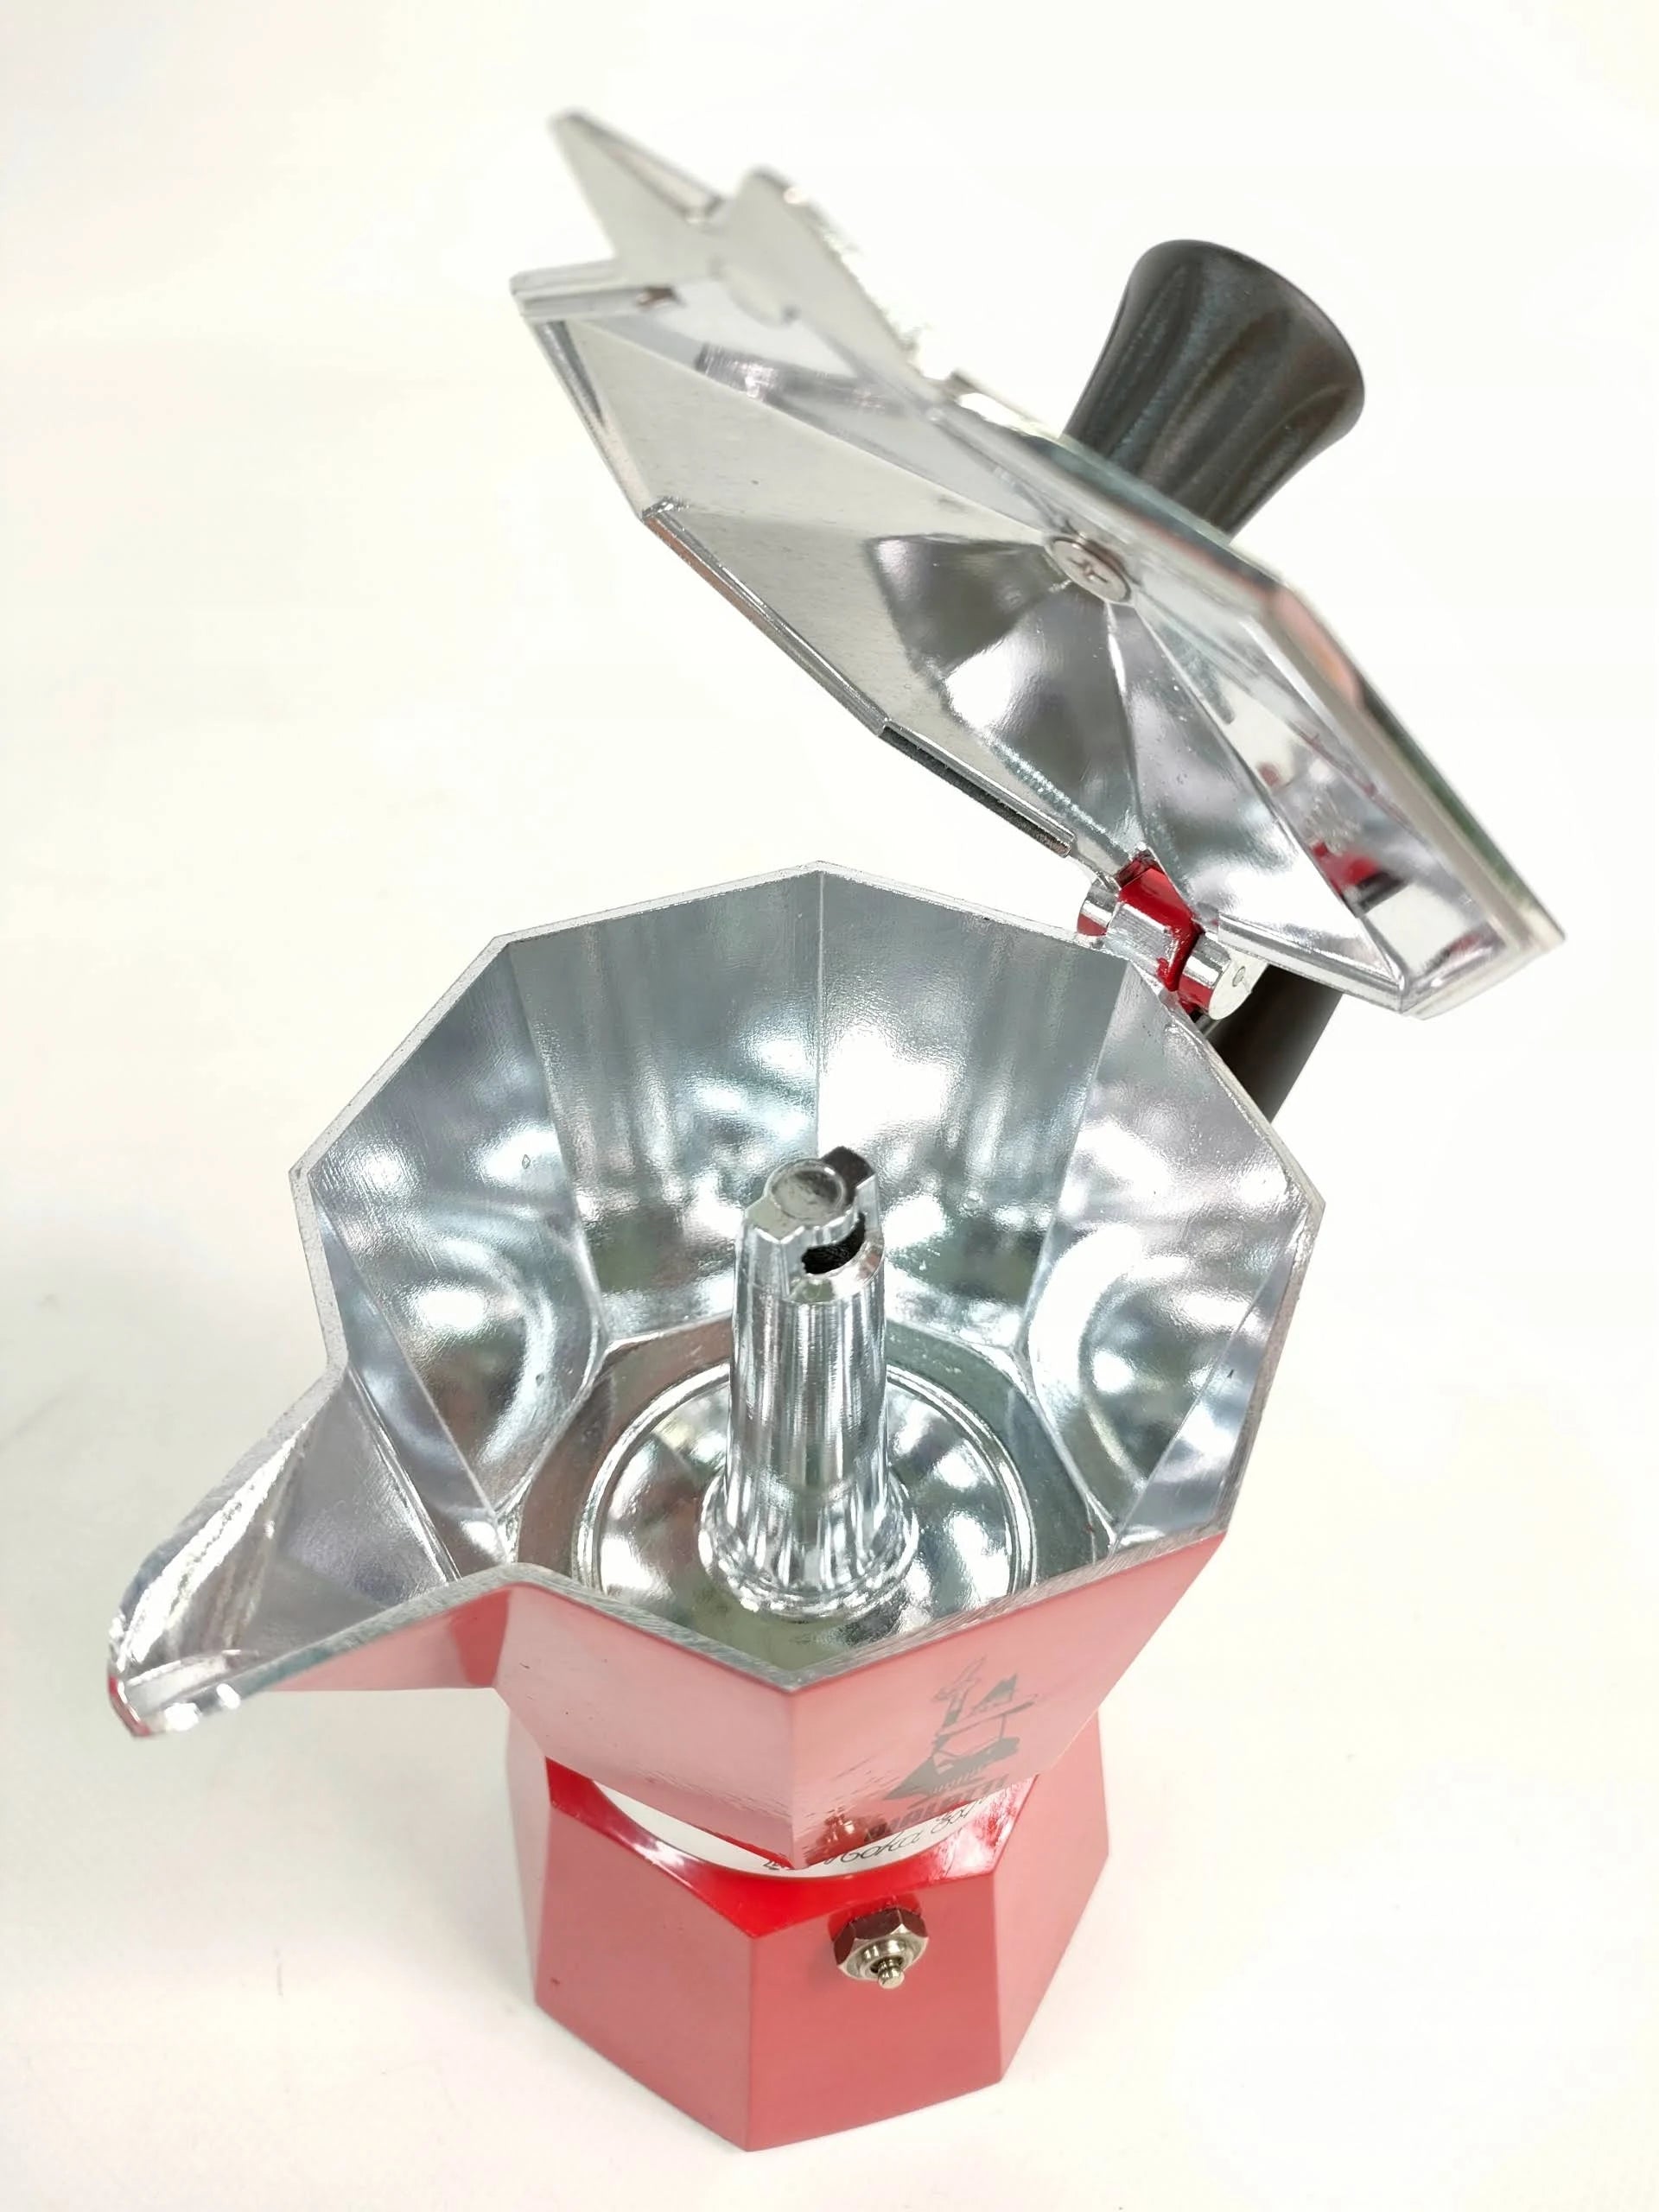 Bialetti Moka Express Stovetop Espresso Maker – 6 Cup – Red